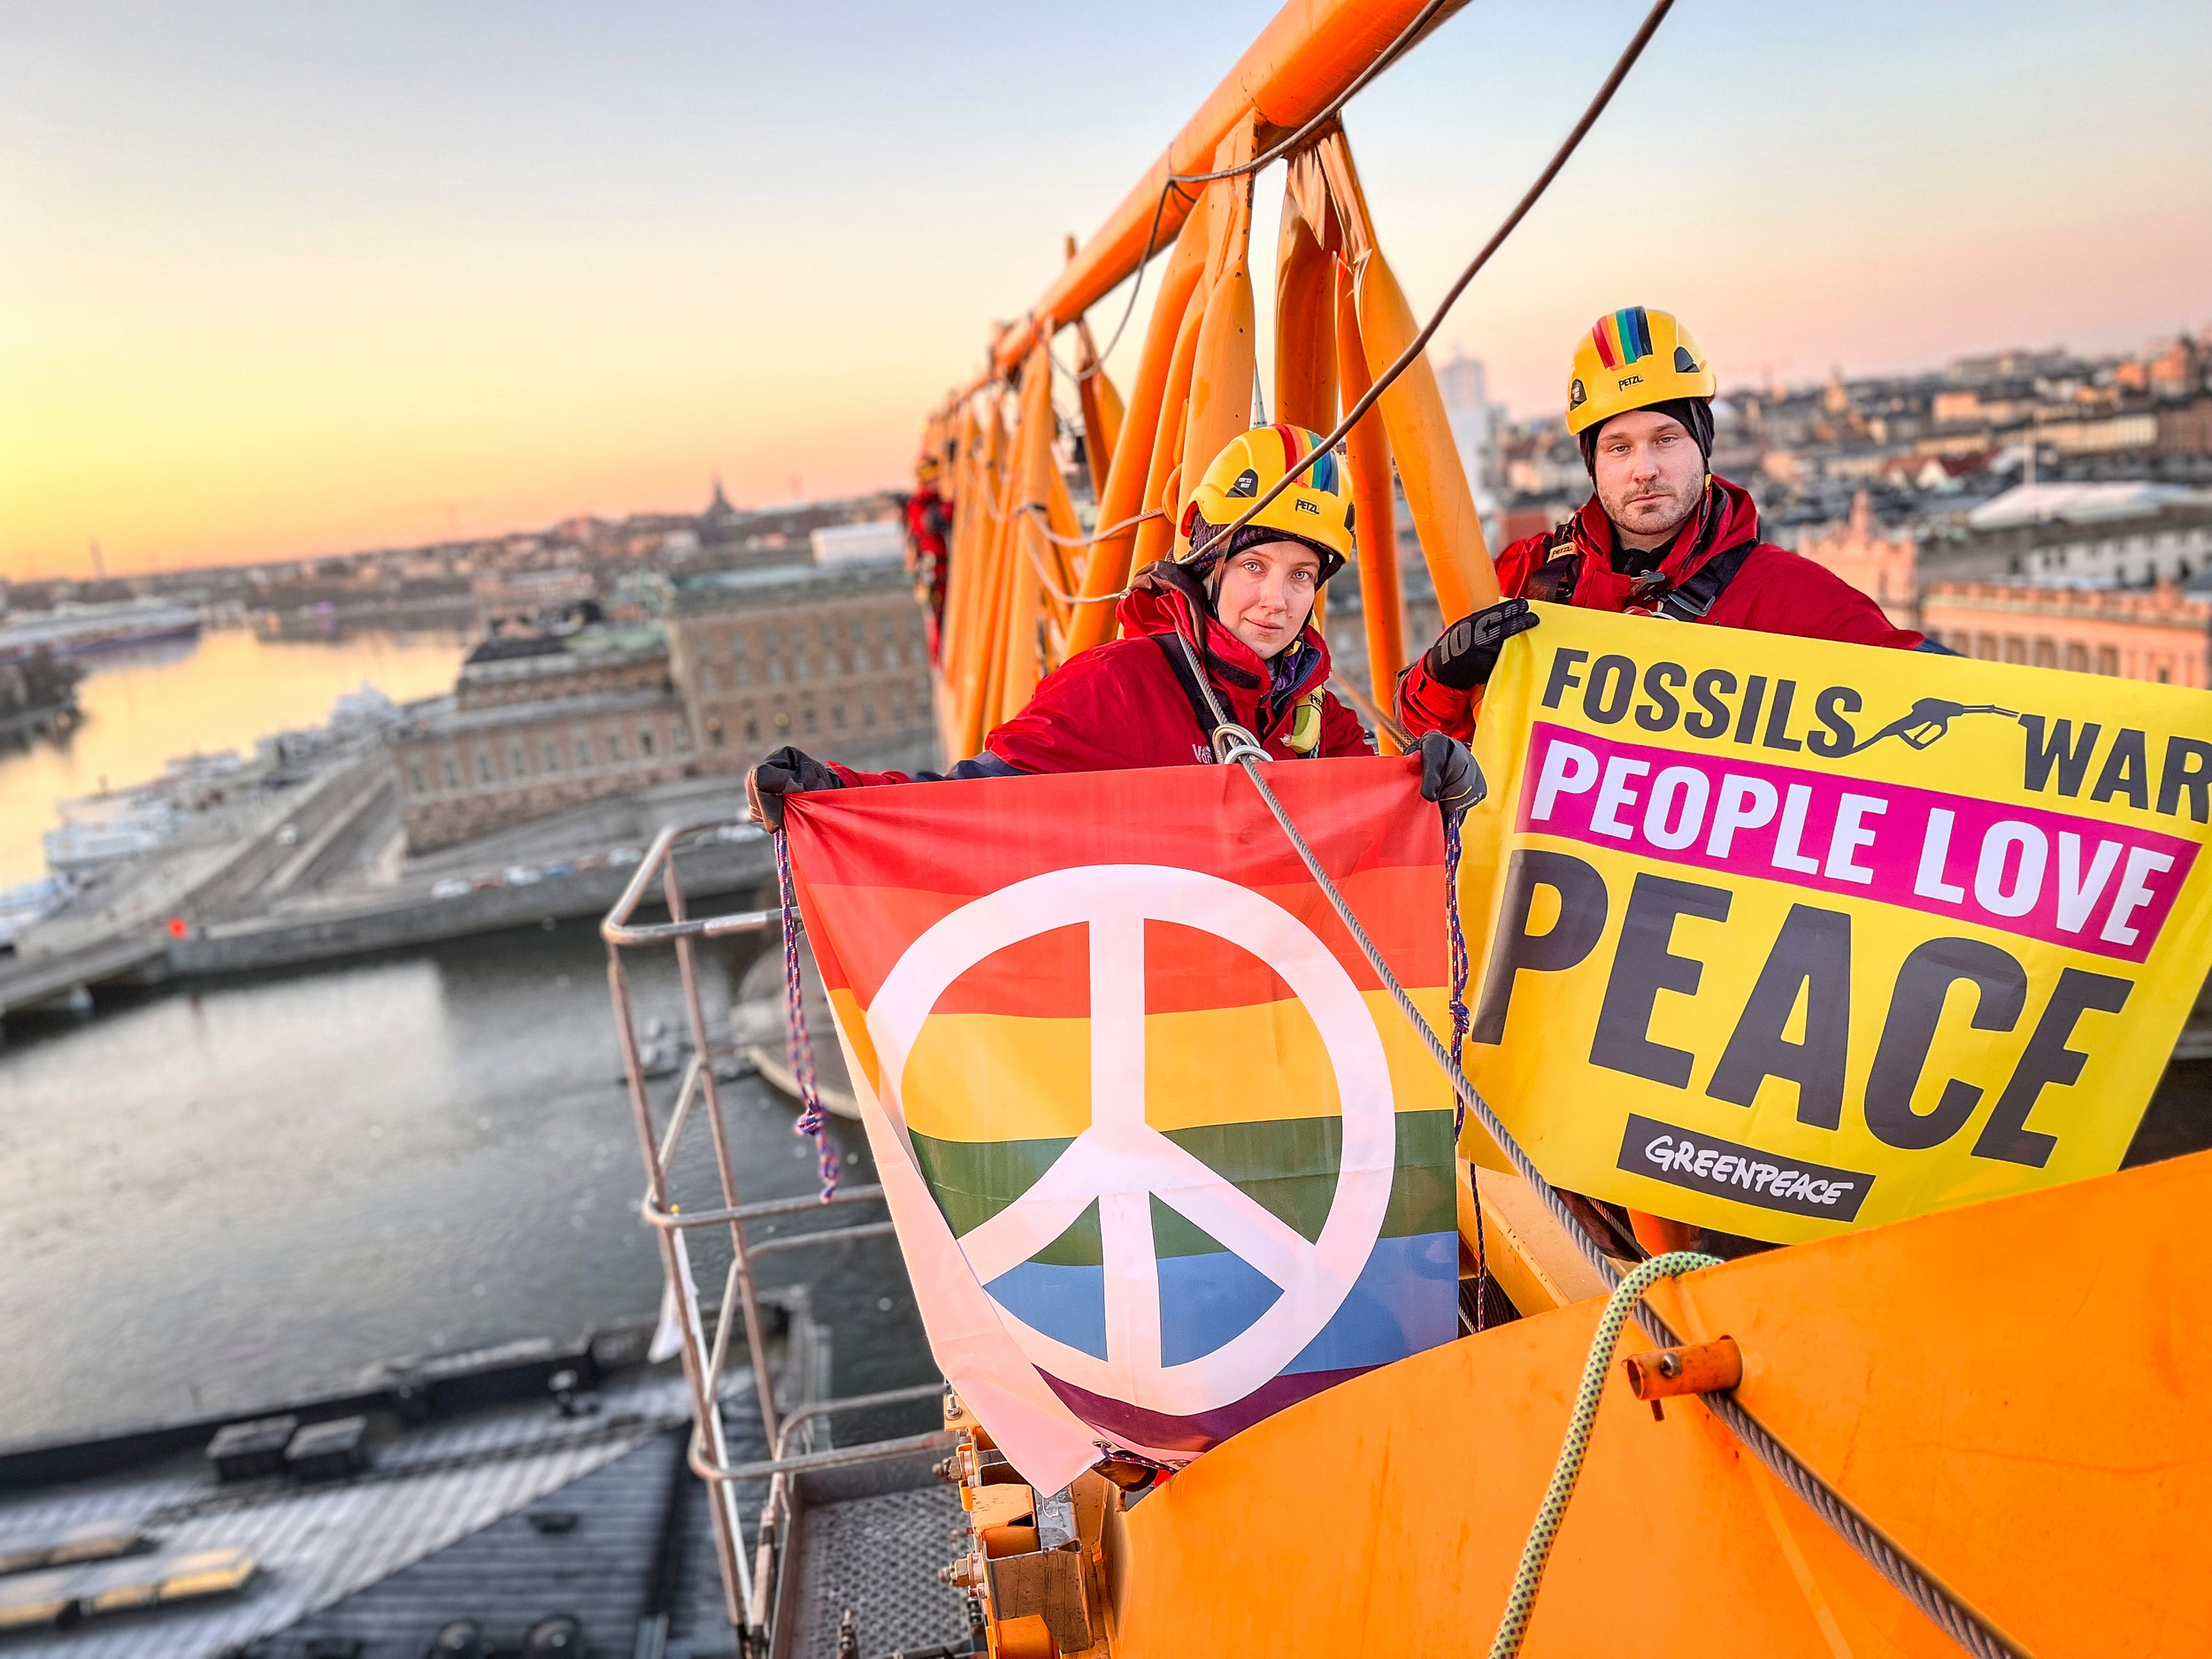 Activistas del Greenpeace nórdico protestaron pacíficamente contra la guerra en las grúas de construcción frente al parlamento sueco. © Christian Åslund / Greenpeace